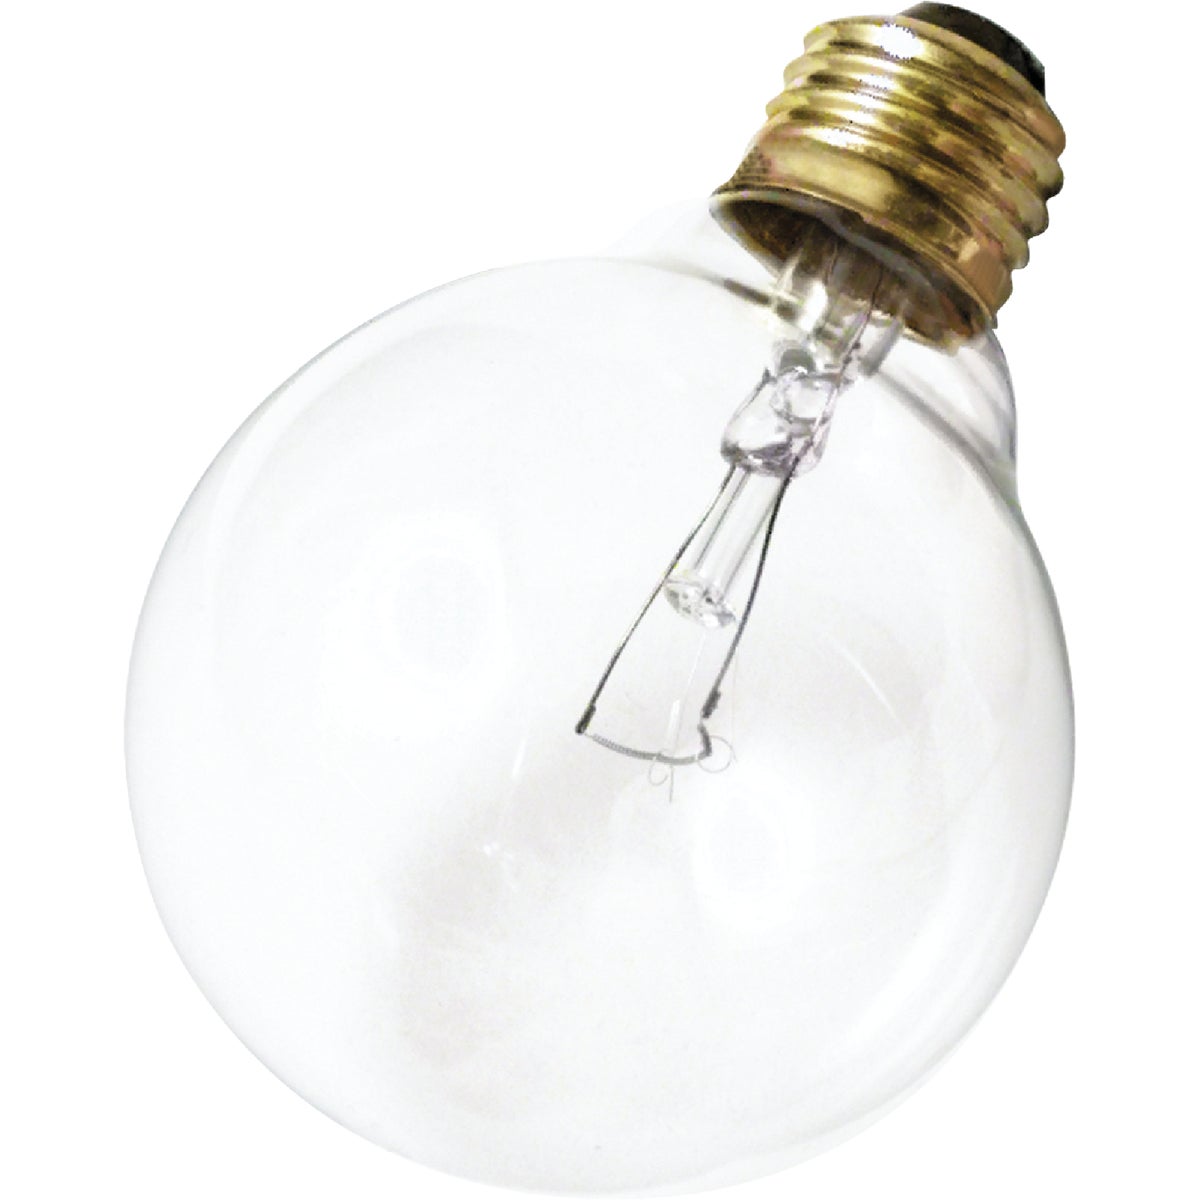 Item 511897, G25, decorative, incandescent globe light bulb with medium brass base.